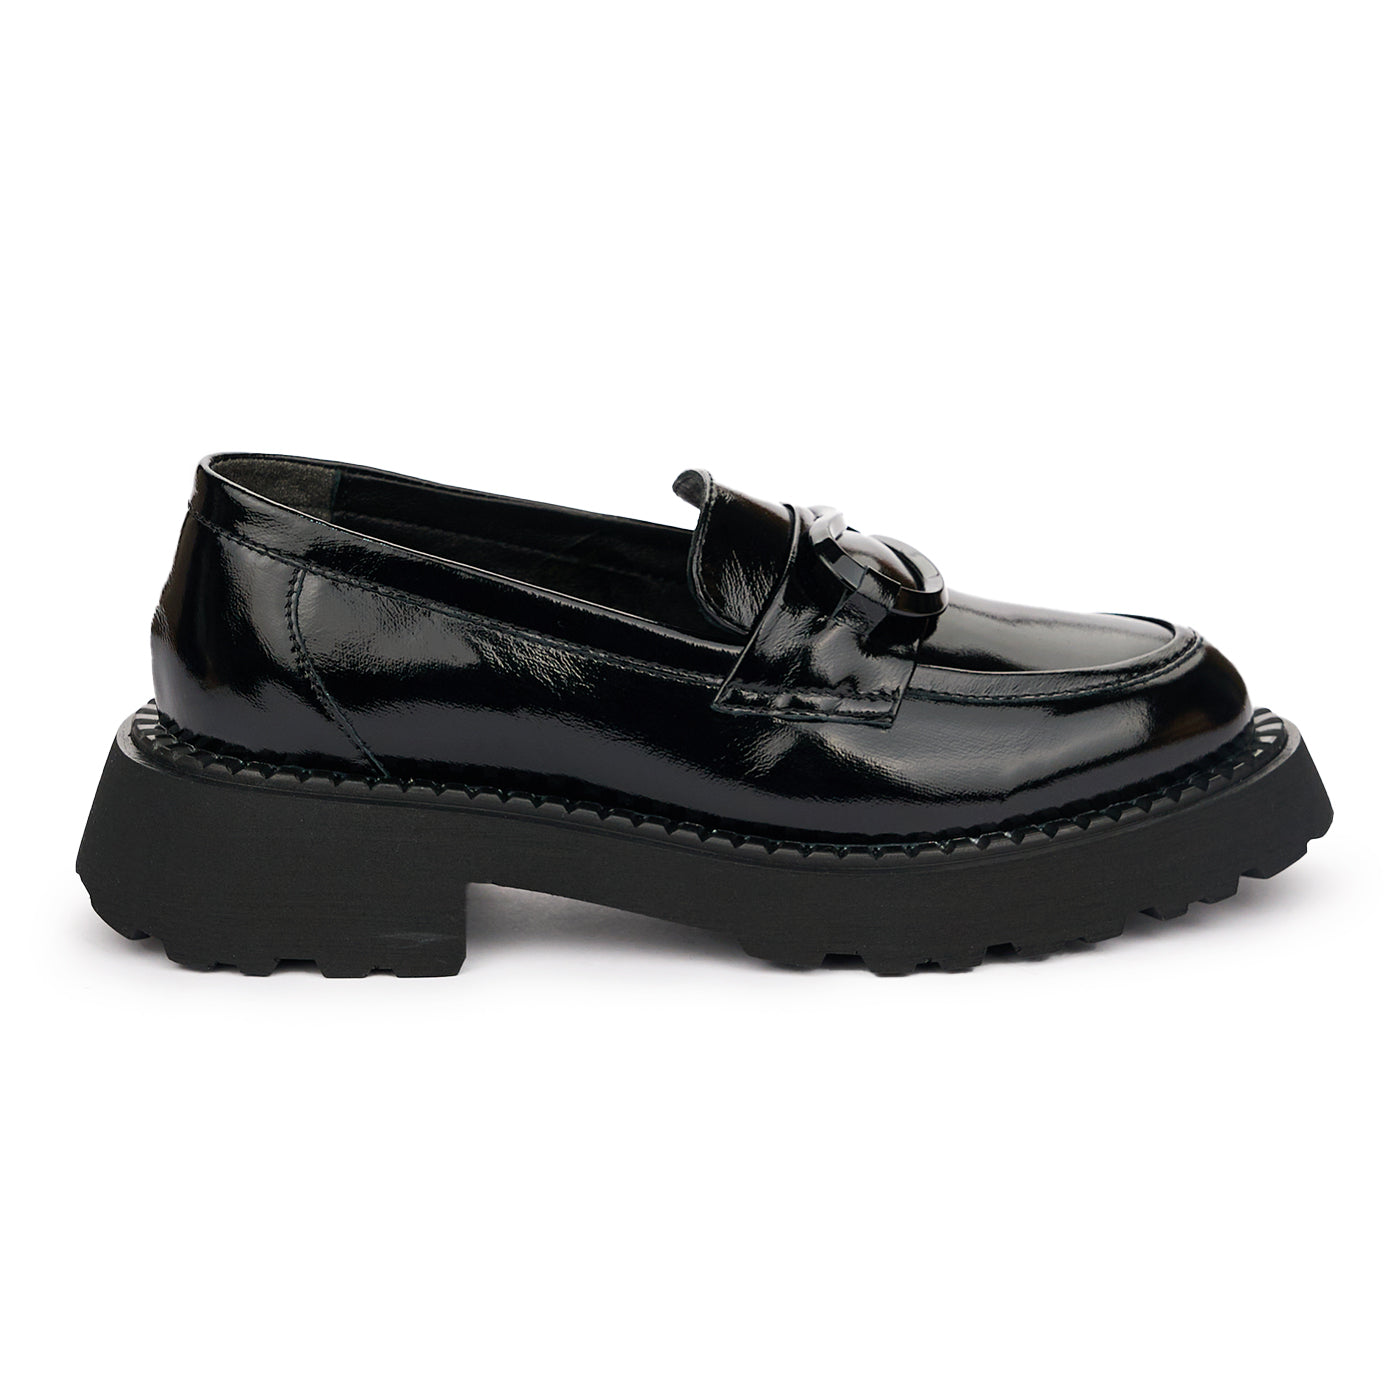 Pantofi dama din piele naturala neagra lacuita 12998